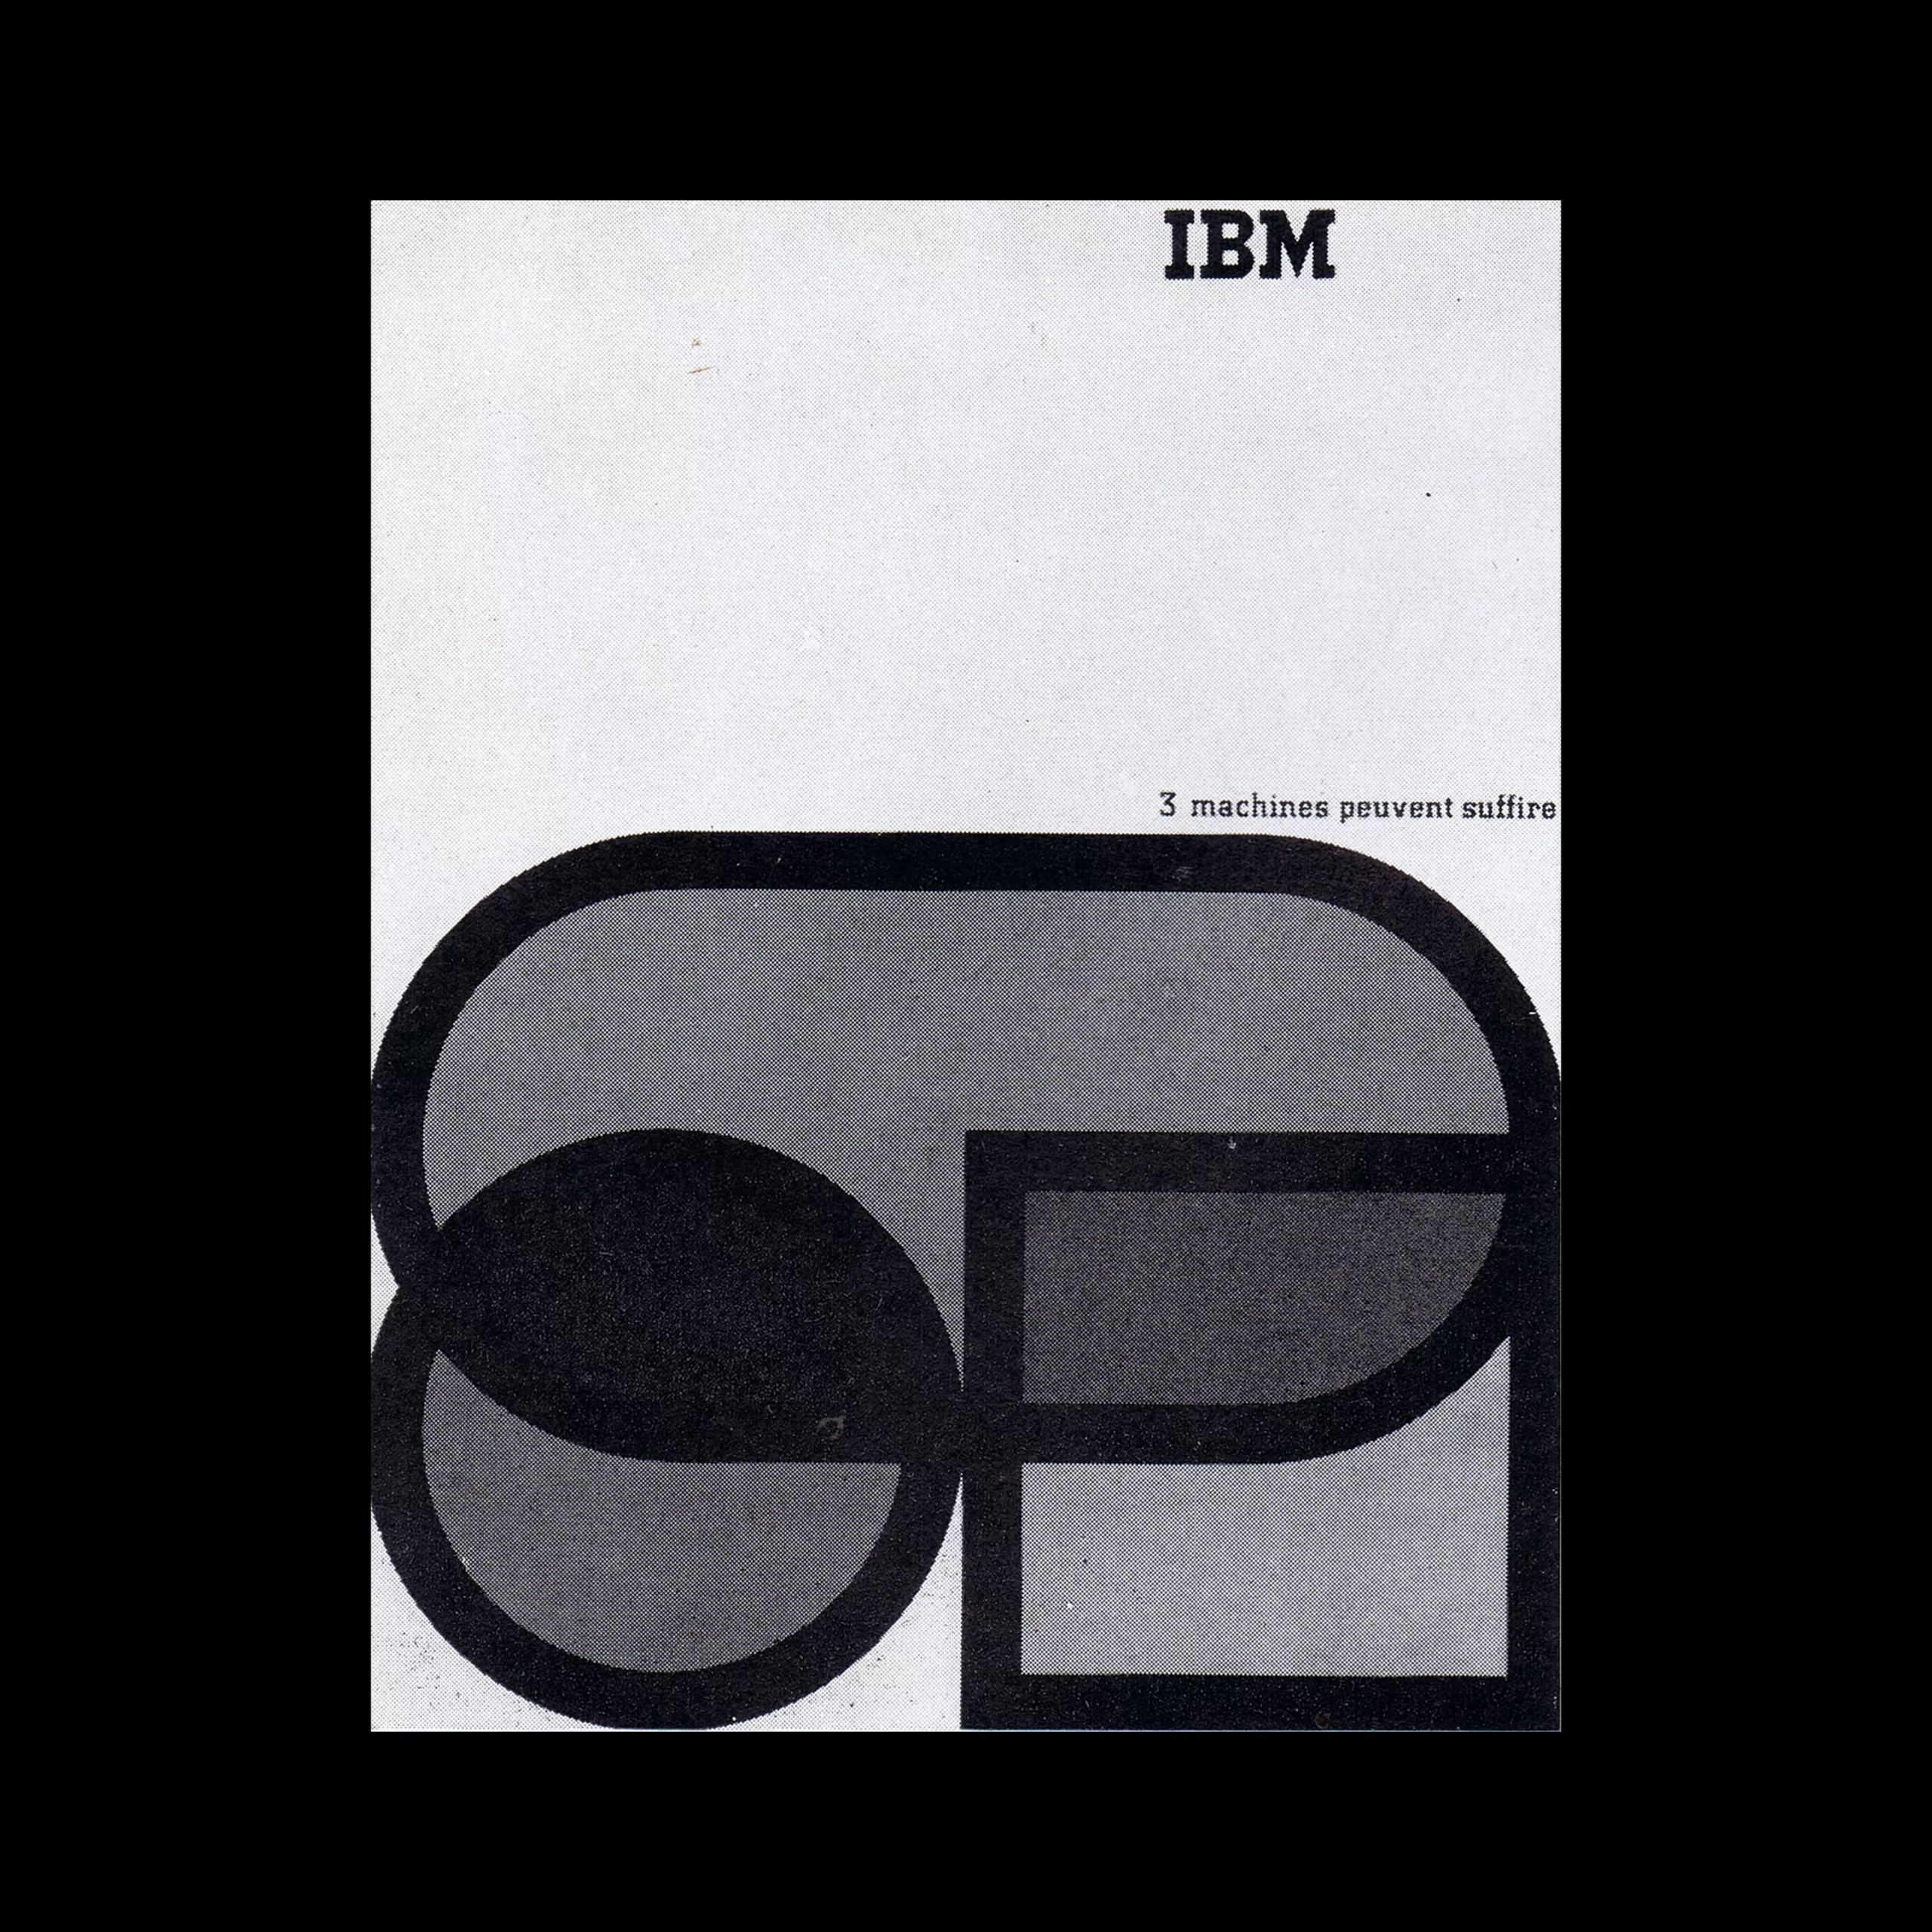 Frank René Testemale’s IBM Advertising in France. Scanned from Gebrauchsgraphik, 4, 1964.